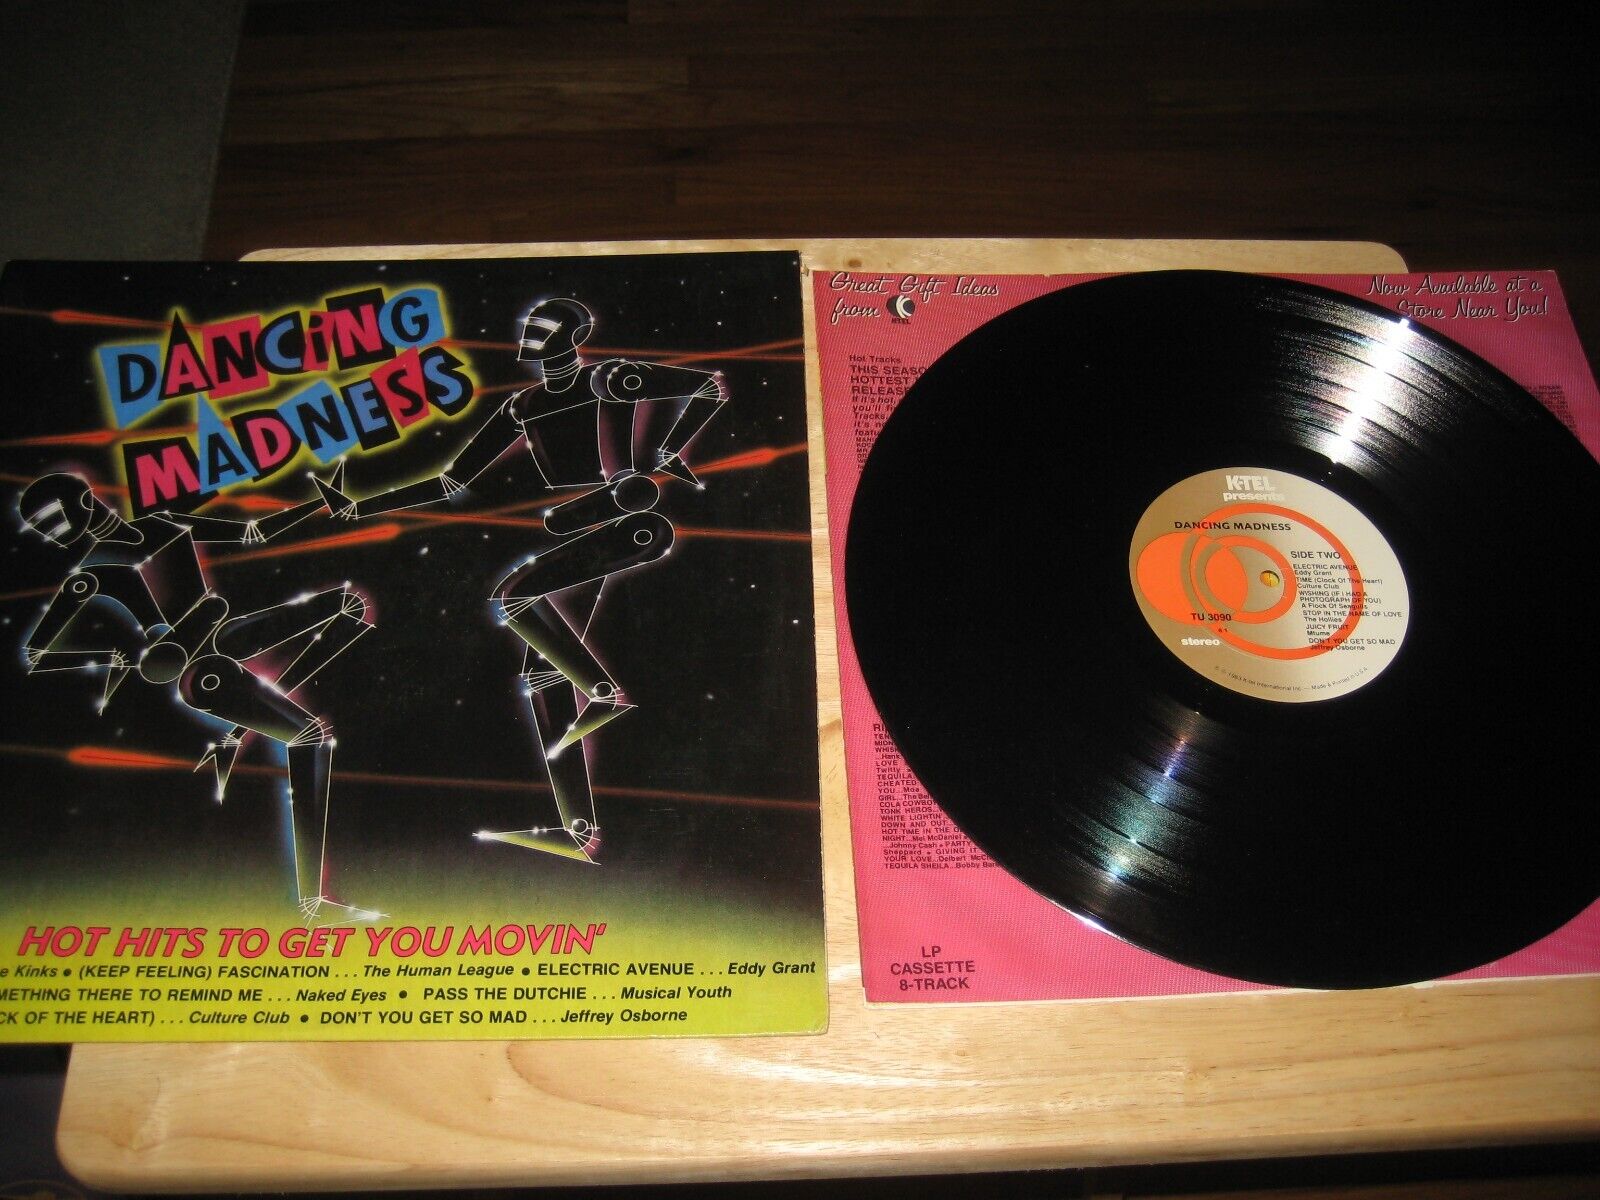 Dancing Madness Vintage Vinyl LP Record Album 1983 K-tel VG++